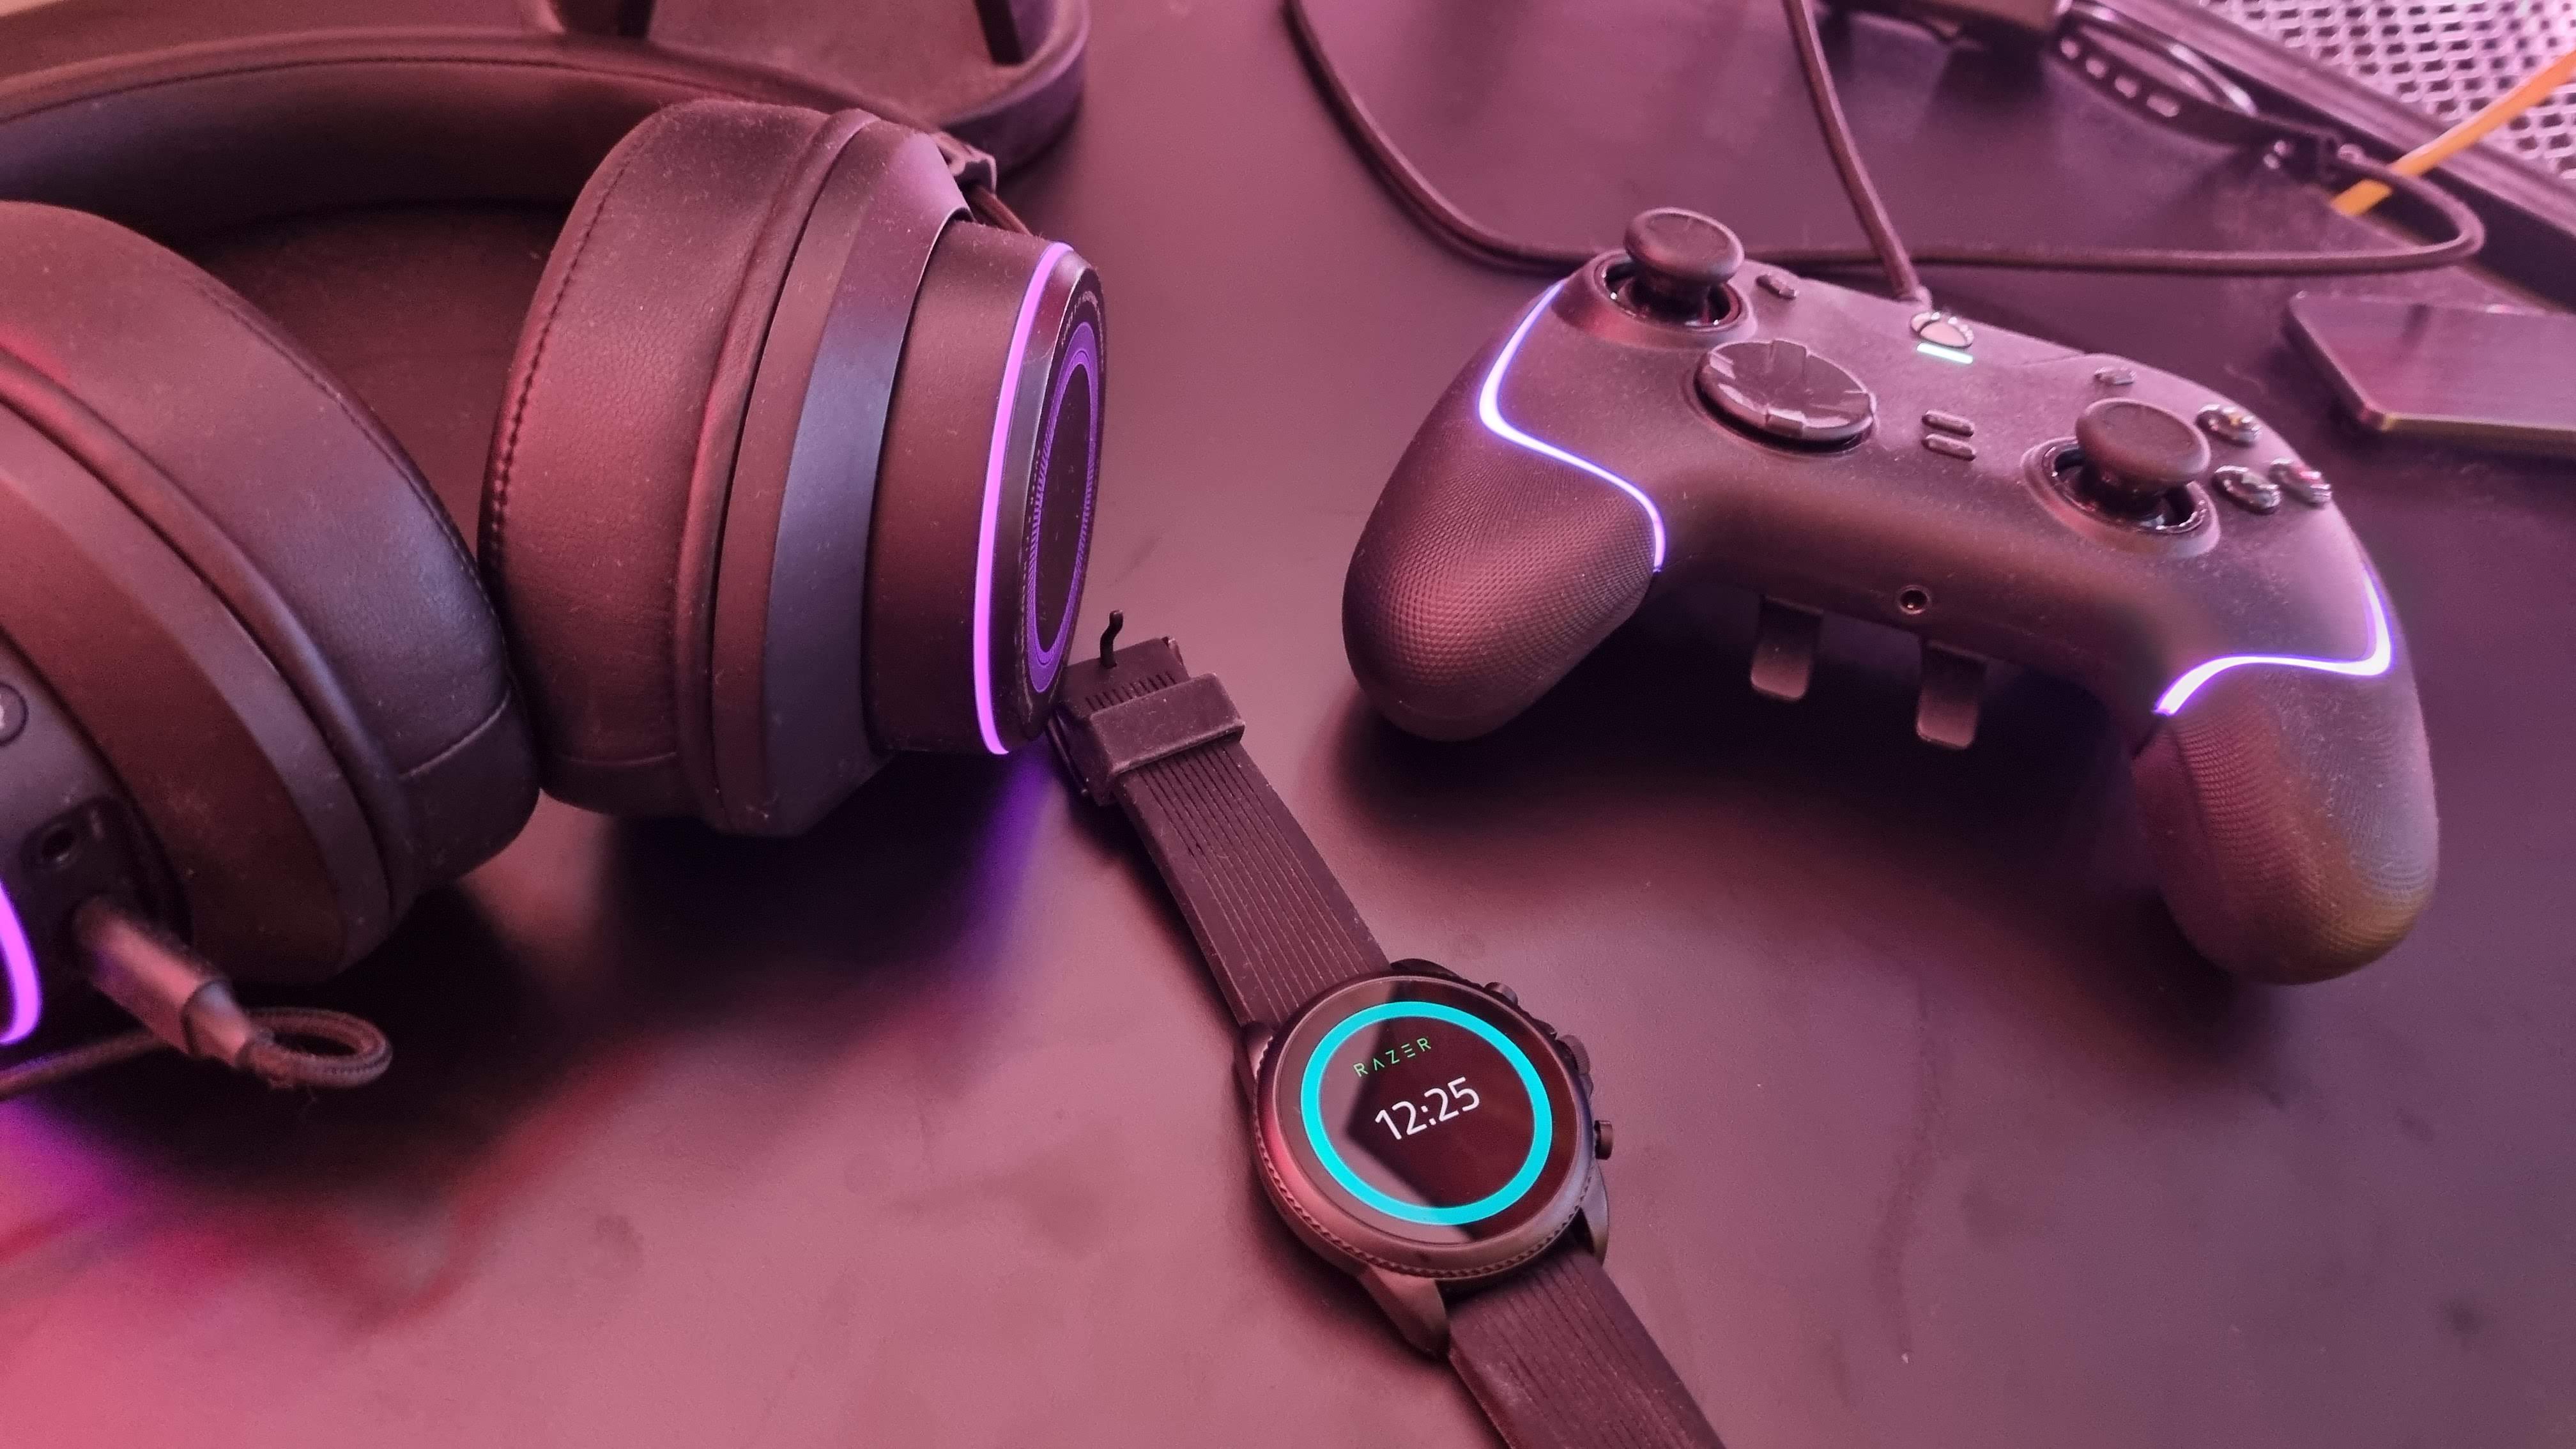 Razer X Fossil Gen 6 smartwatch on a desk with gaming peripherals